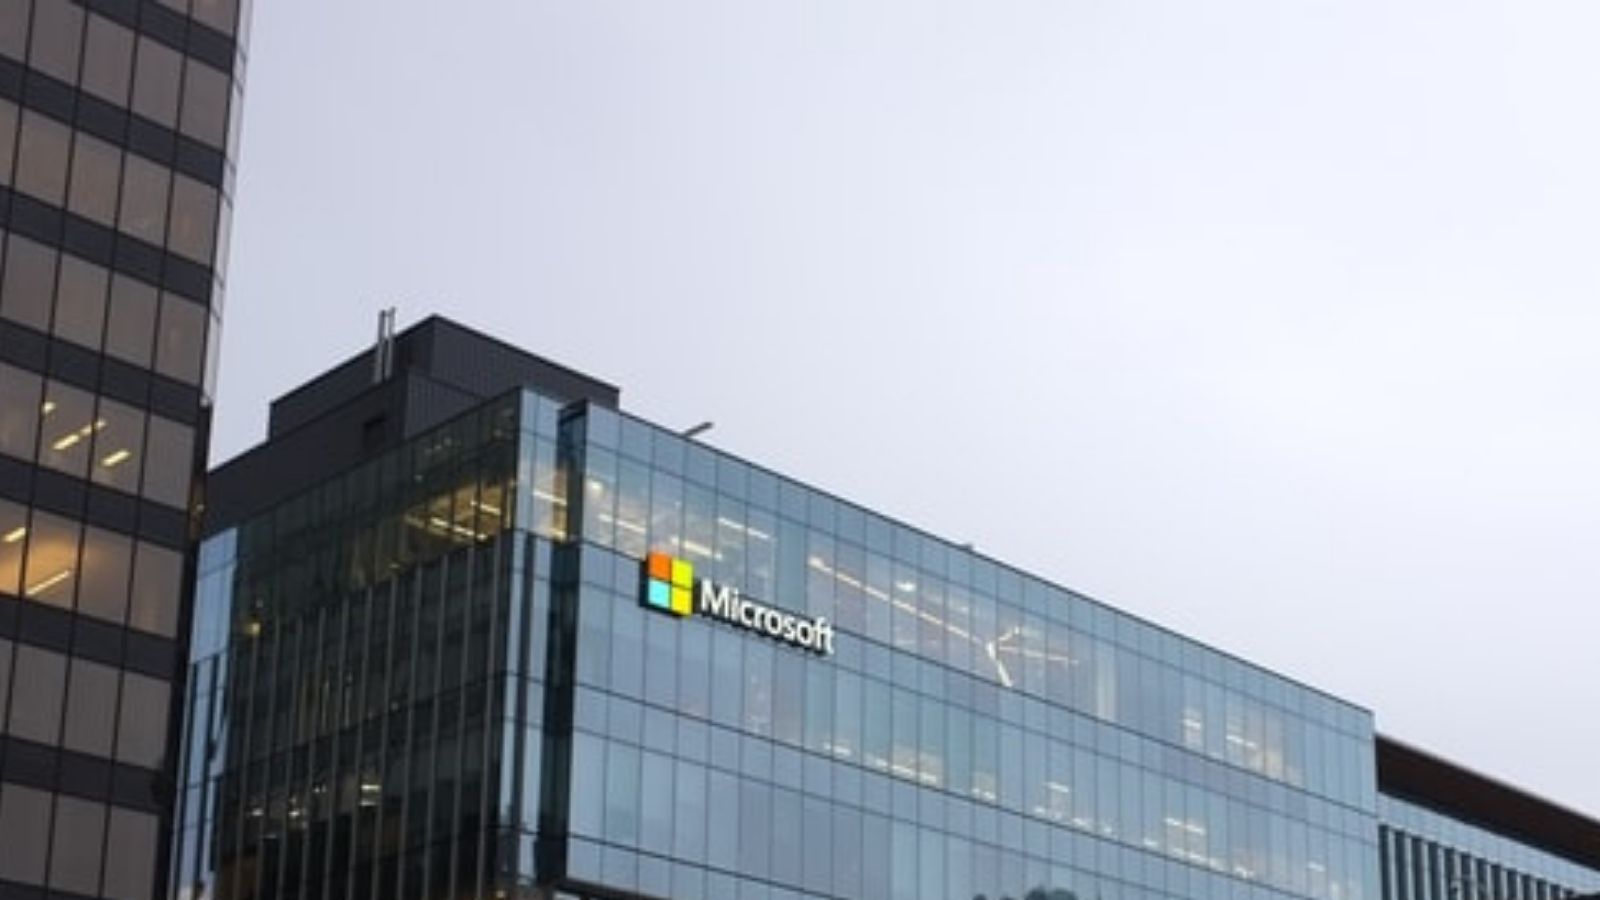 Microsoft Company